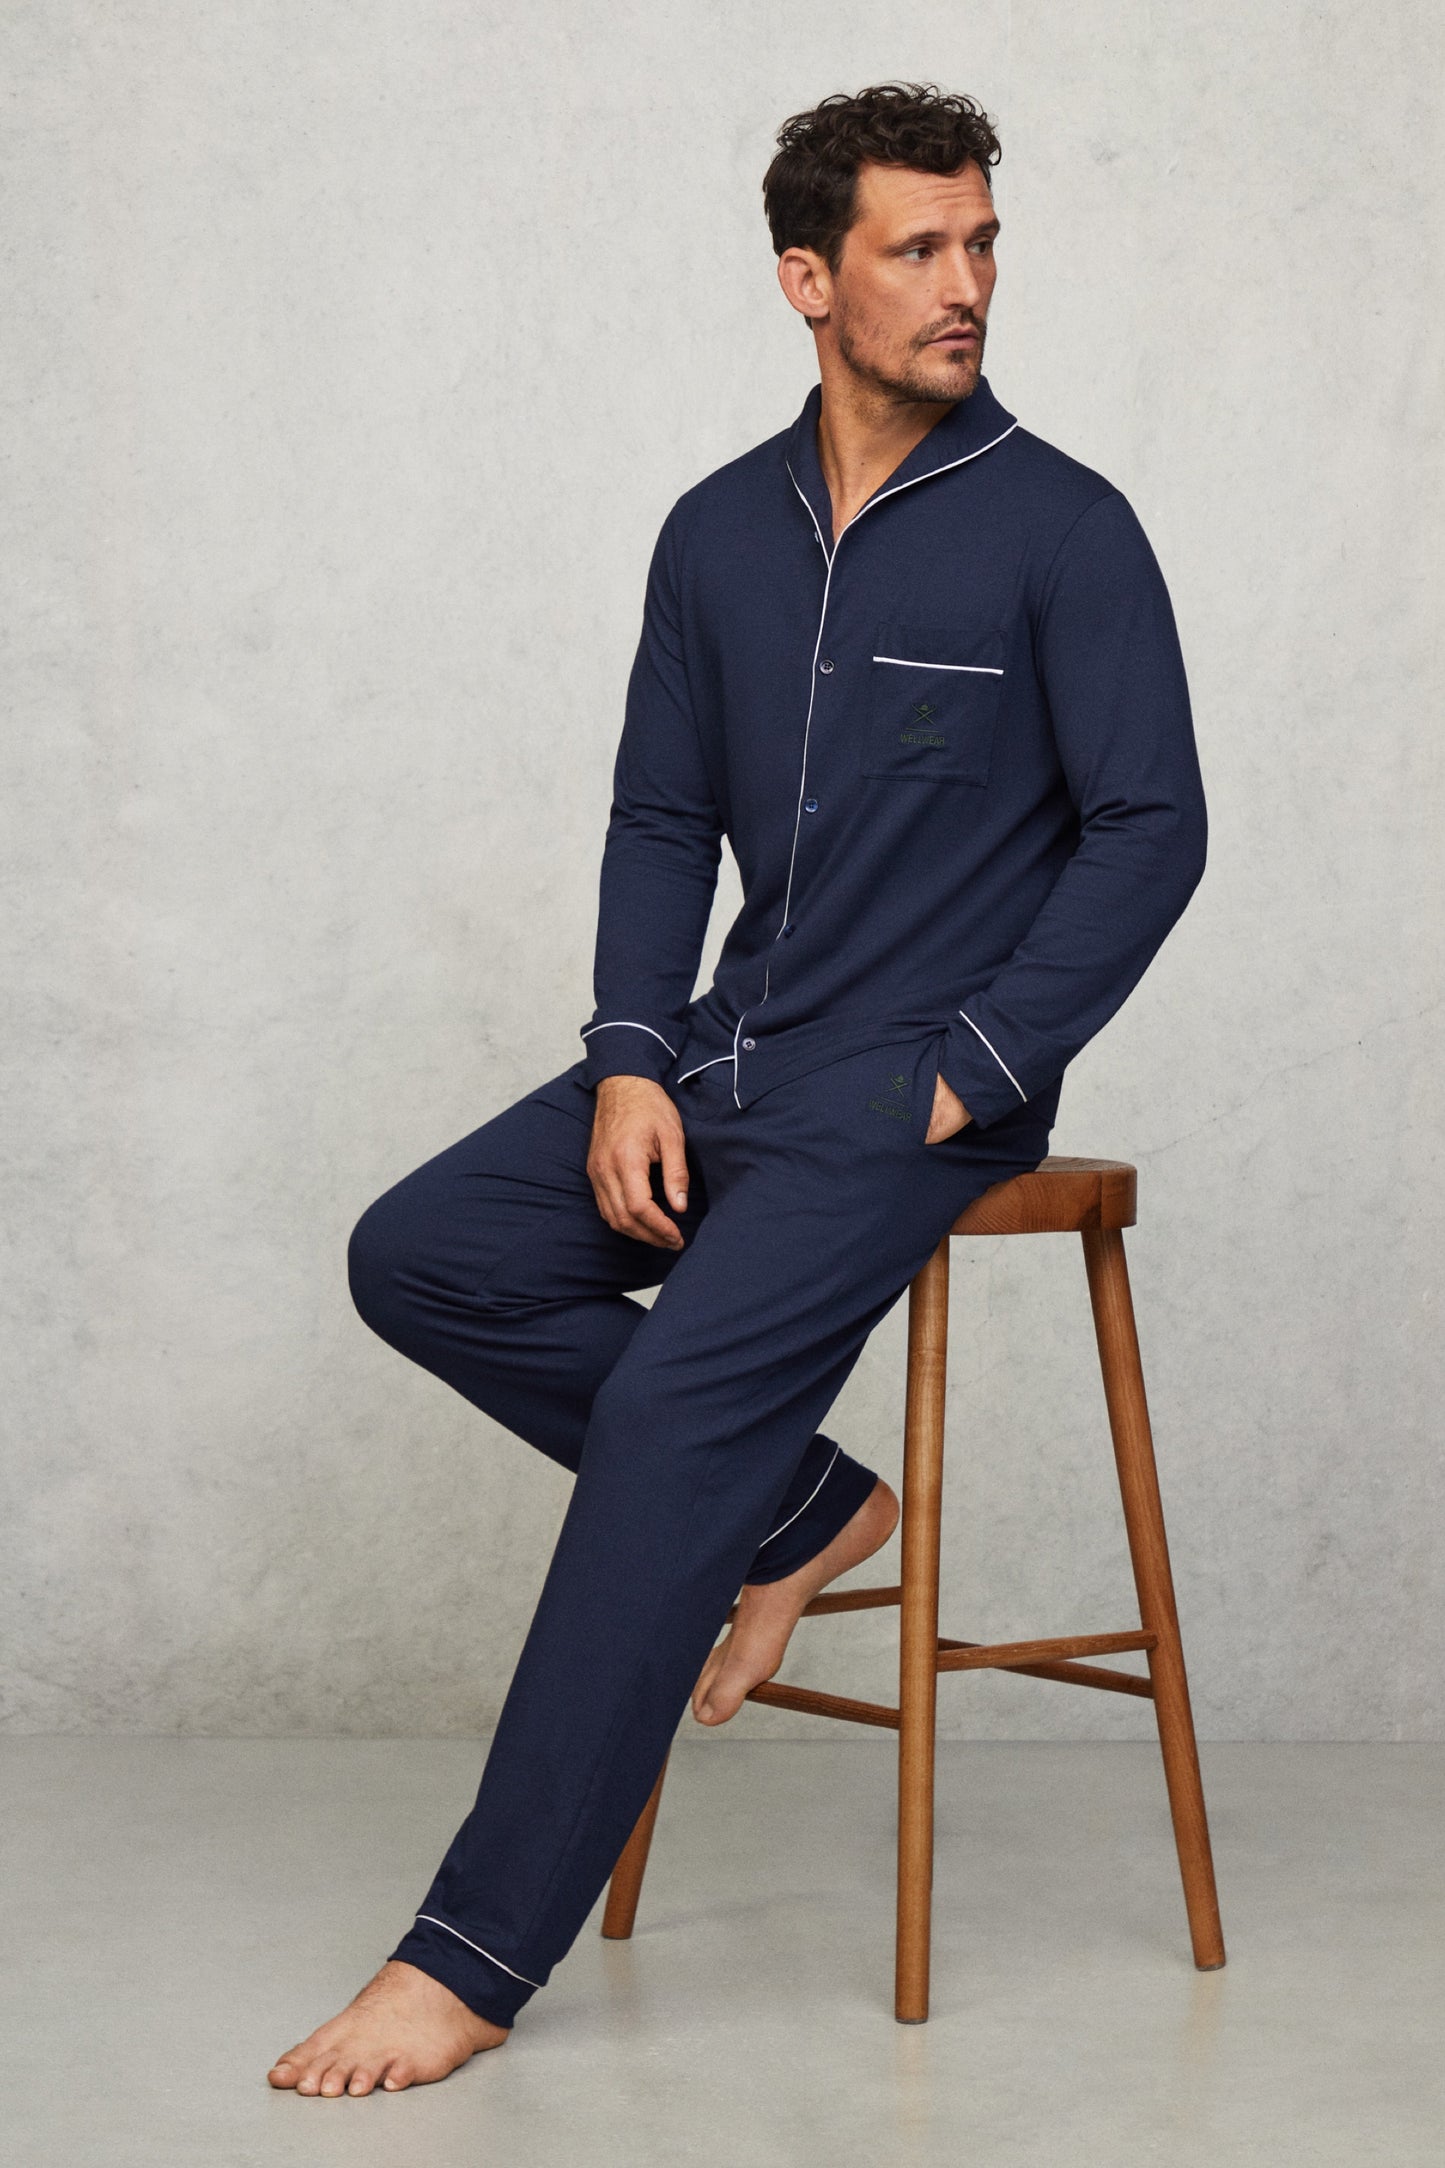 Hackett x Wellwear Ultimate Pyjama Shirt - Navy | David Gandy Wellwear